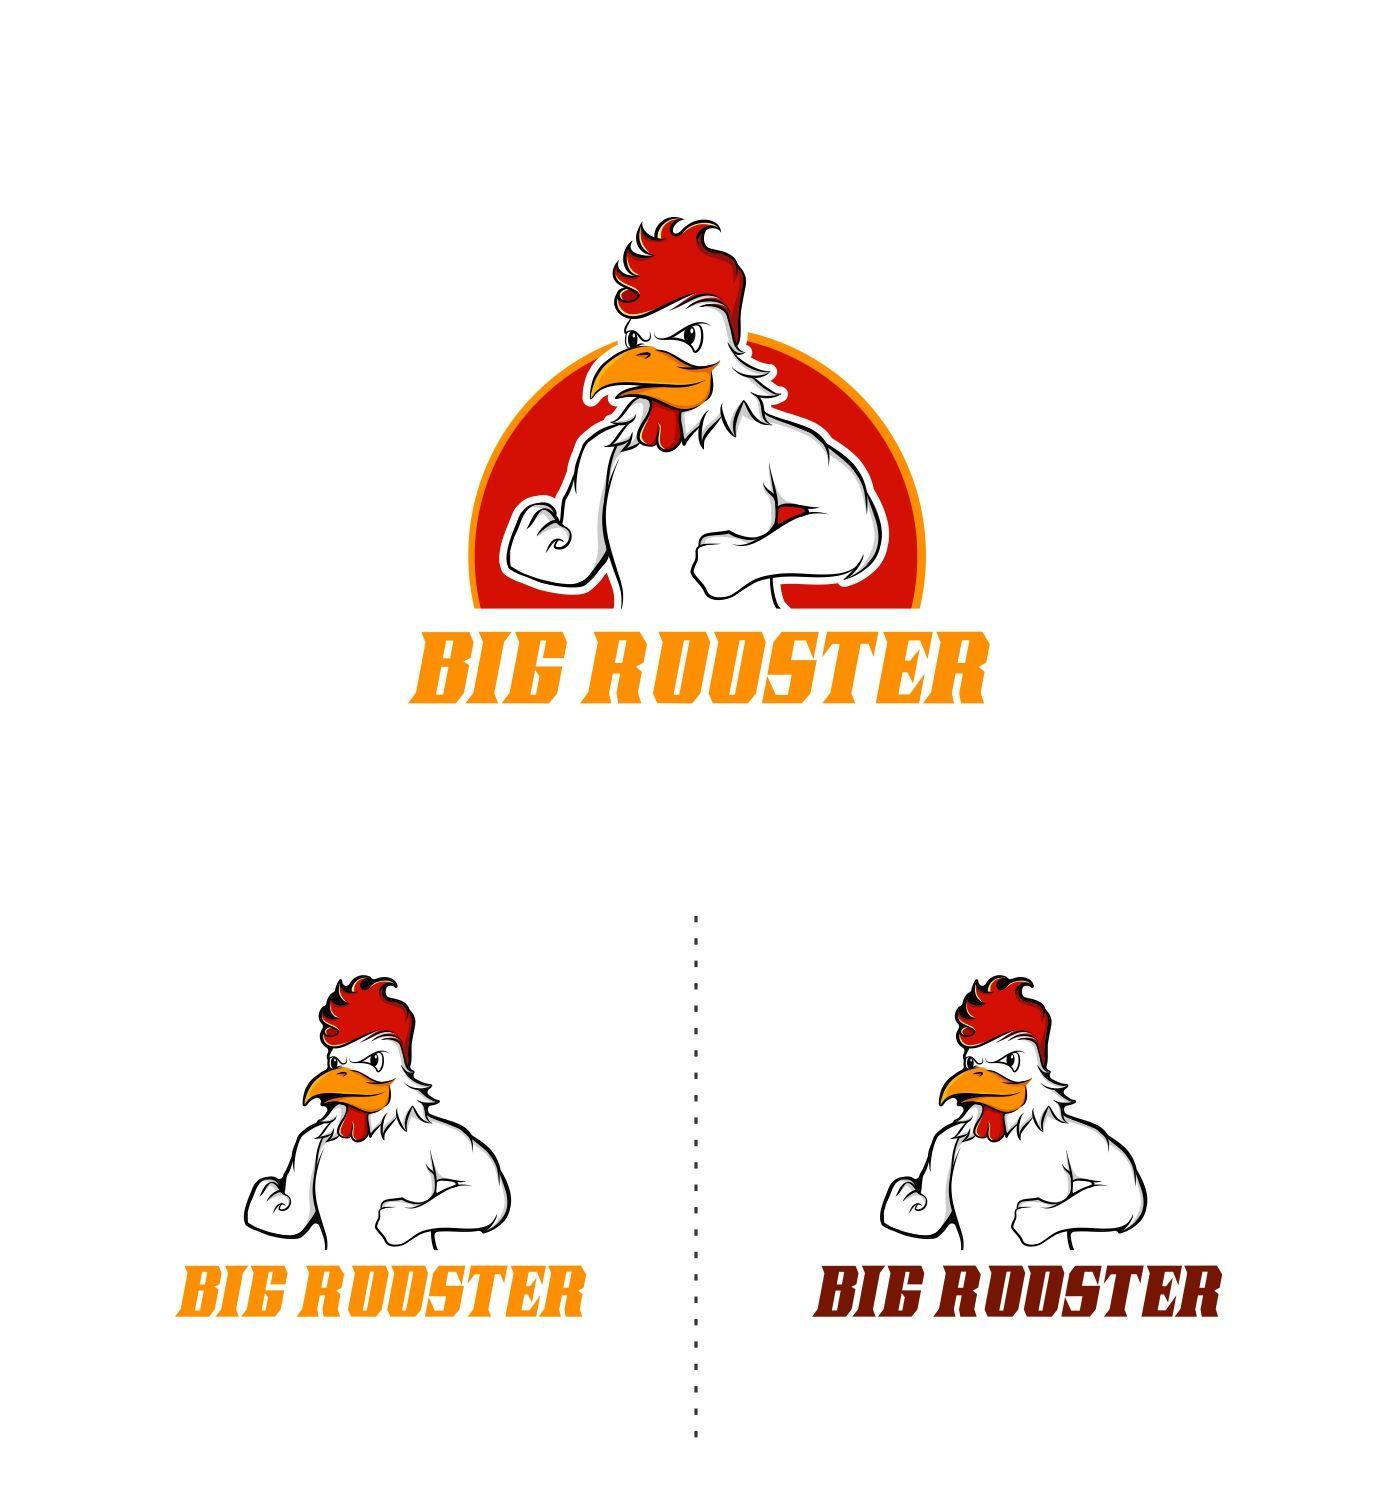 Food Chain Logo - Feminine, Modern, Fast Food Chain Logo Design for Big Rooster